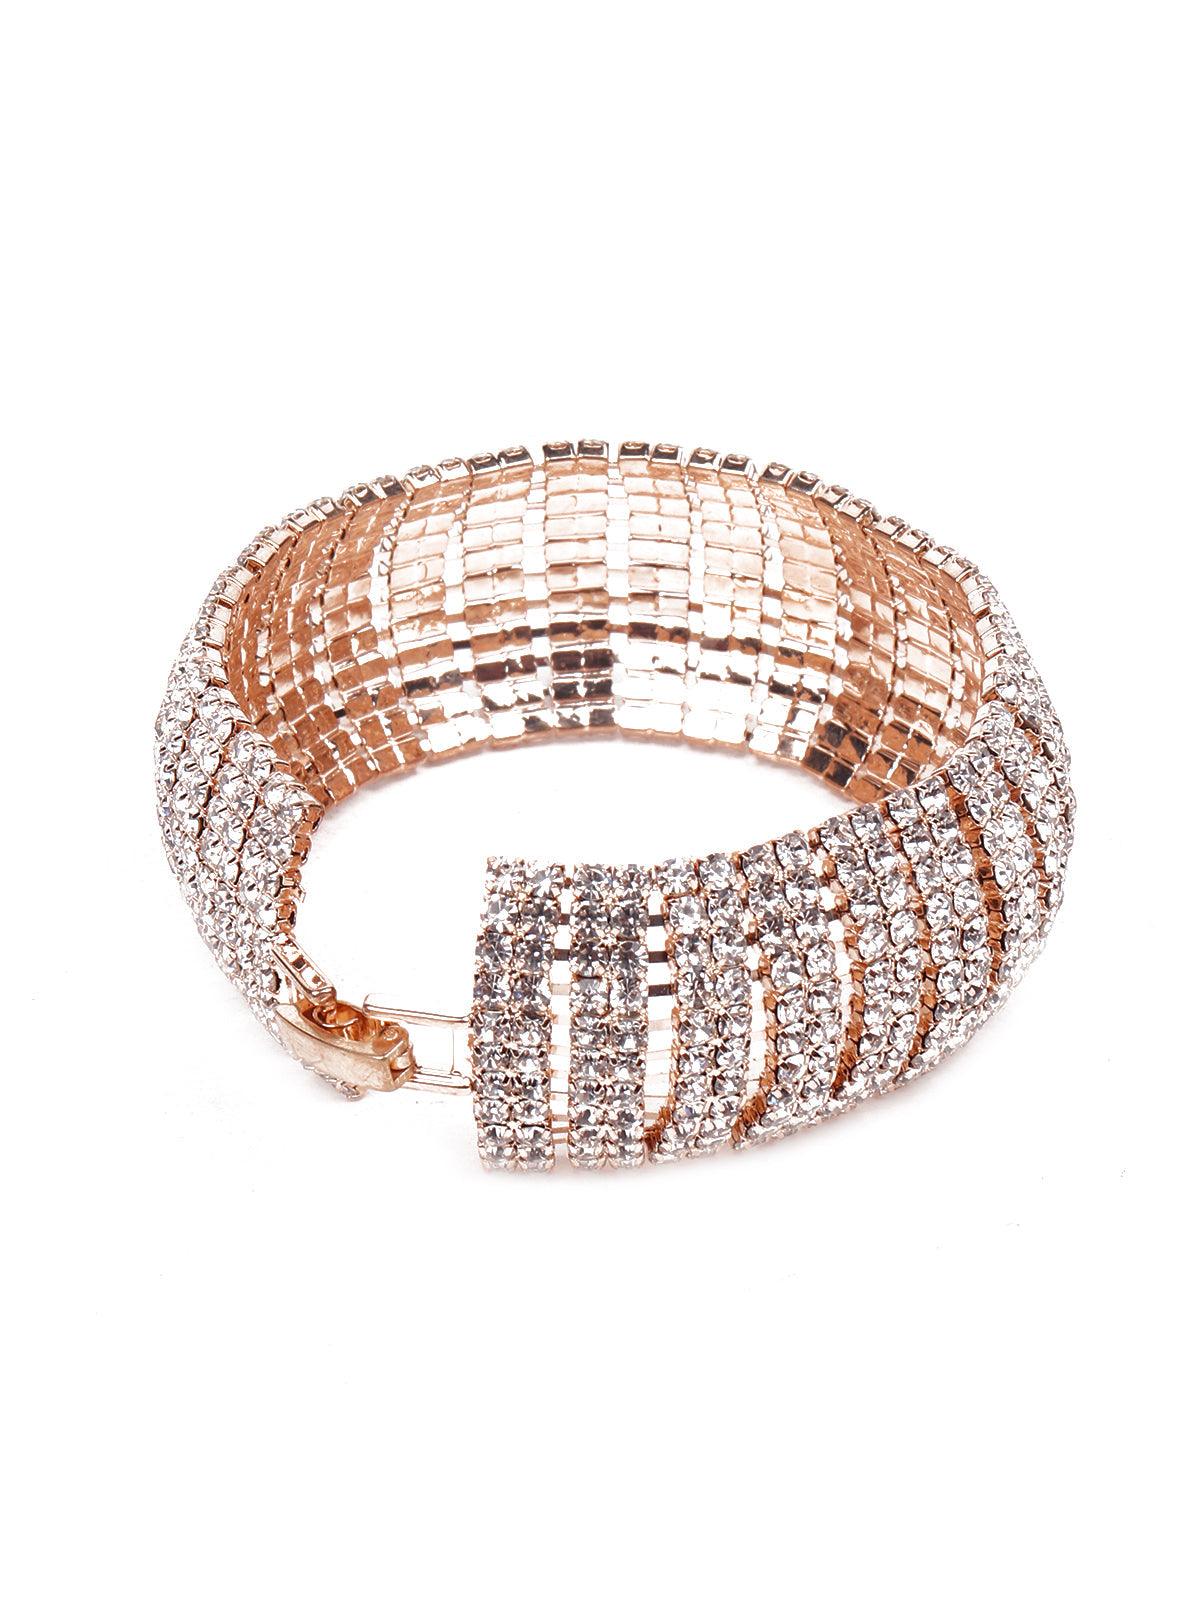 Copper Hammered Cuff Bracelet - Tranquil Sky Jewelry